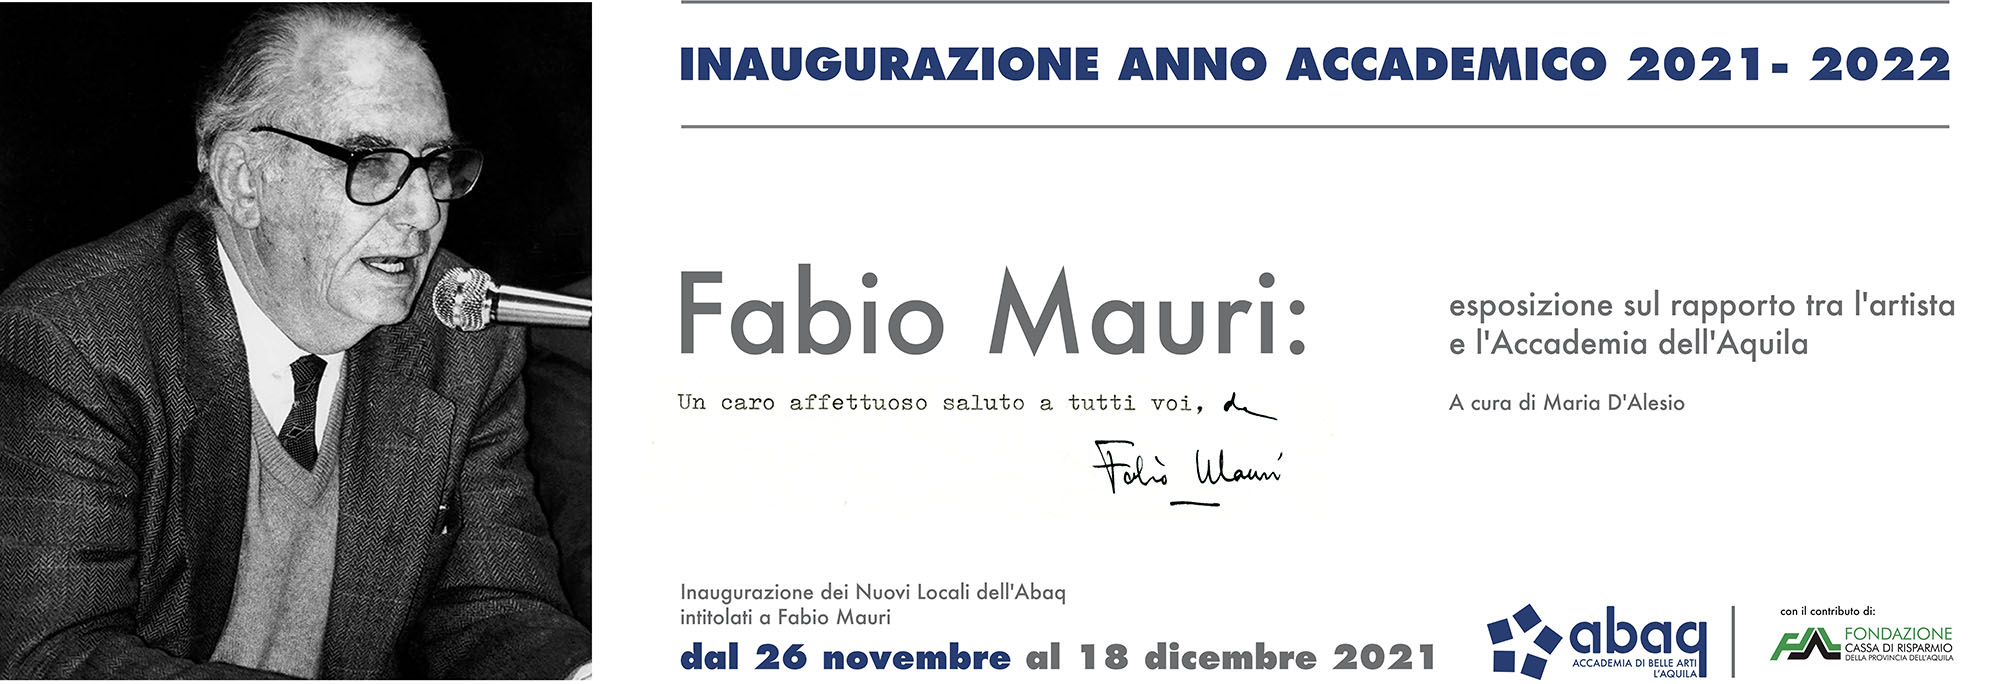 Fabio Mauri - Un caro affettuoso saluto a tutti voi